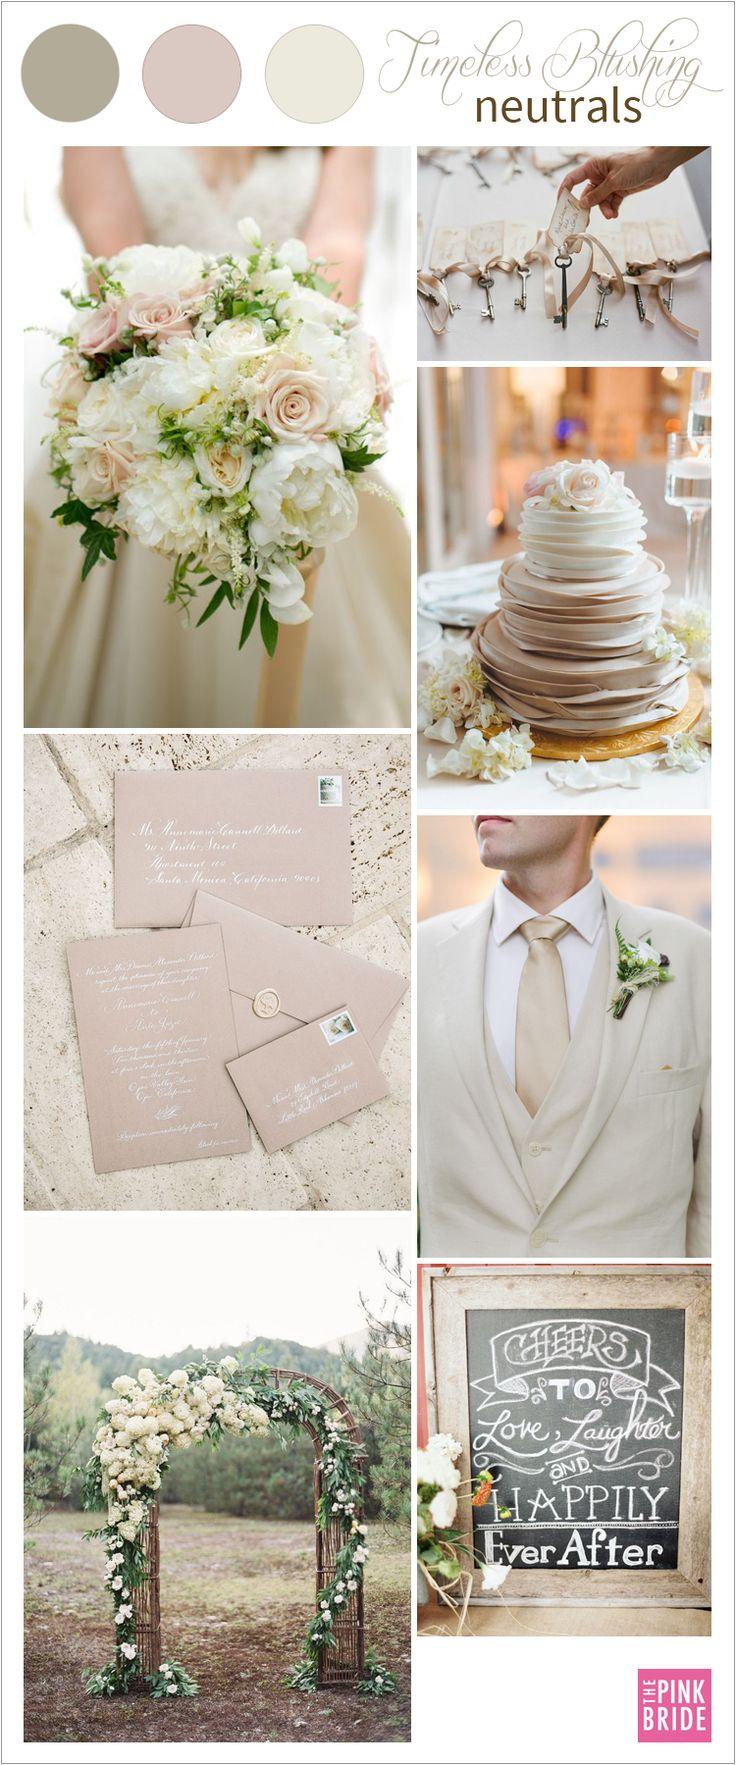 زفاف - Wedding Color Board: Timeless Blushing Neutrals